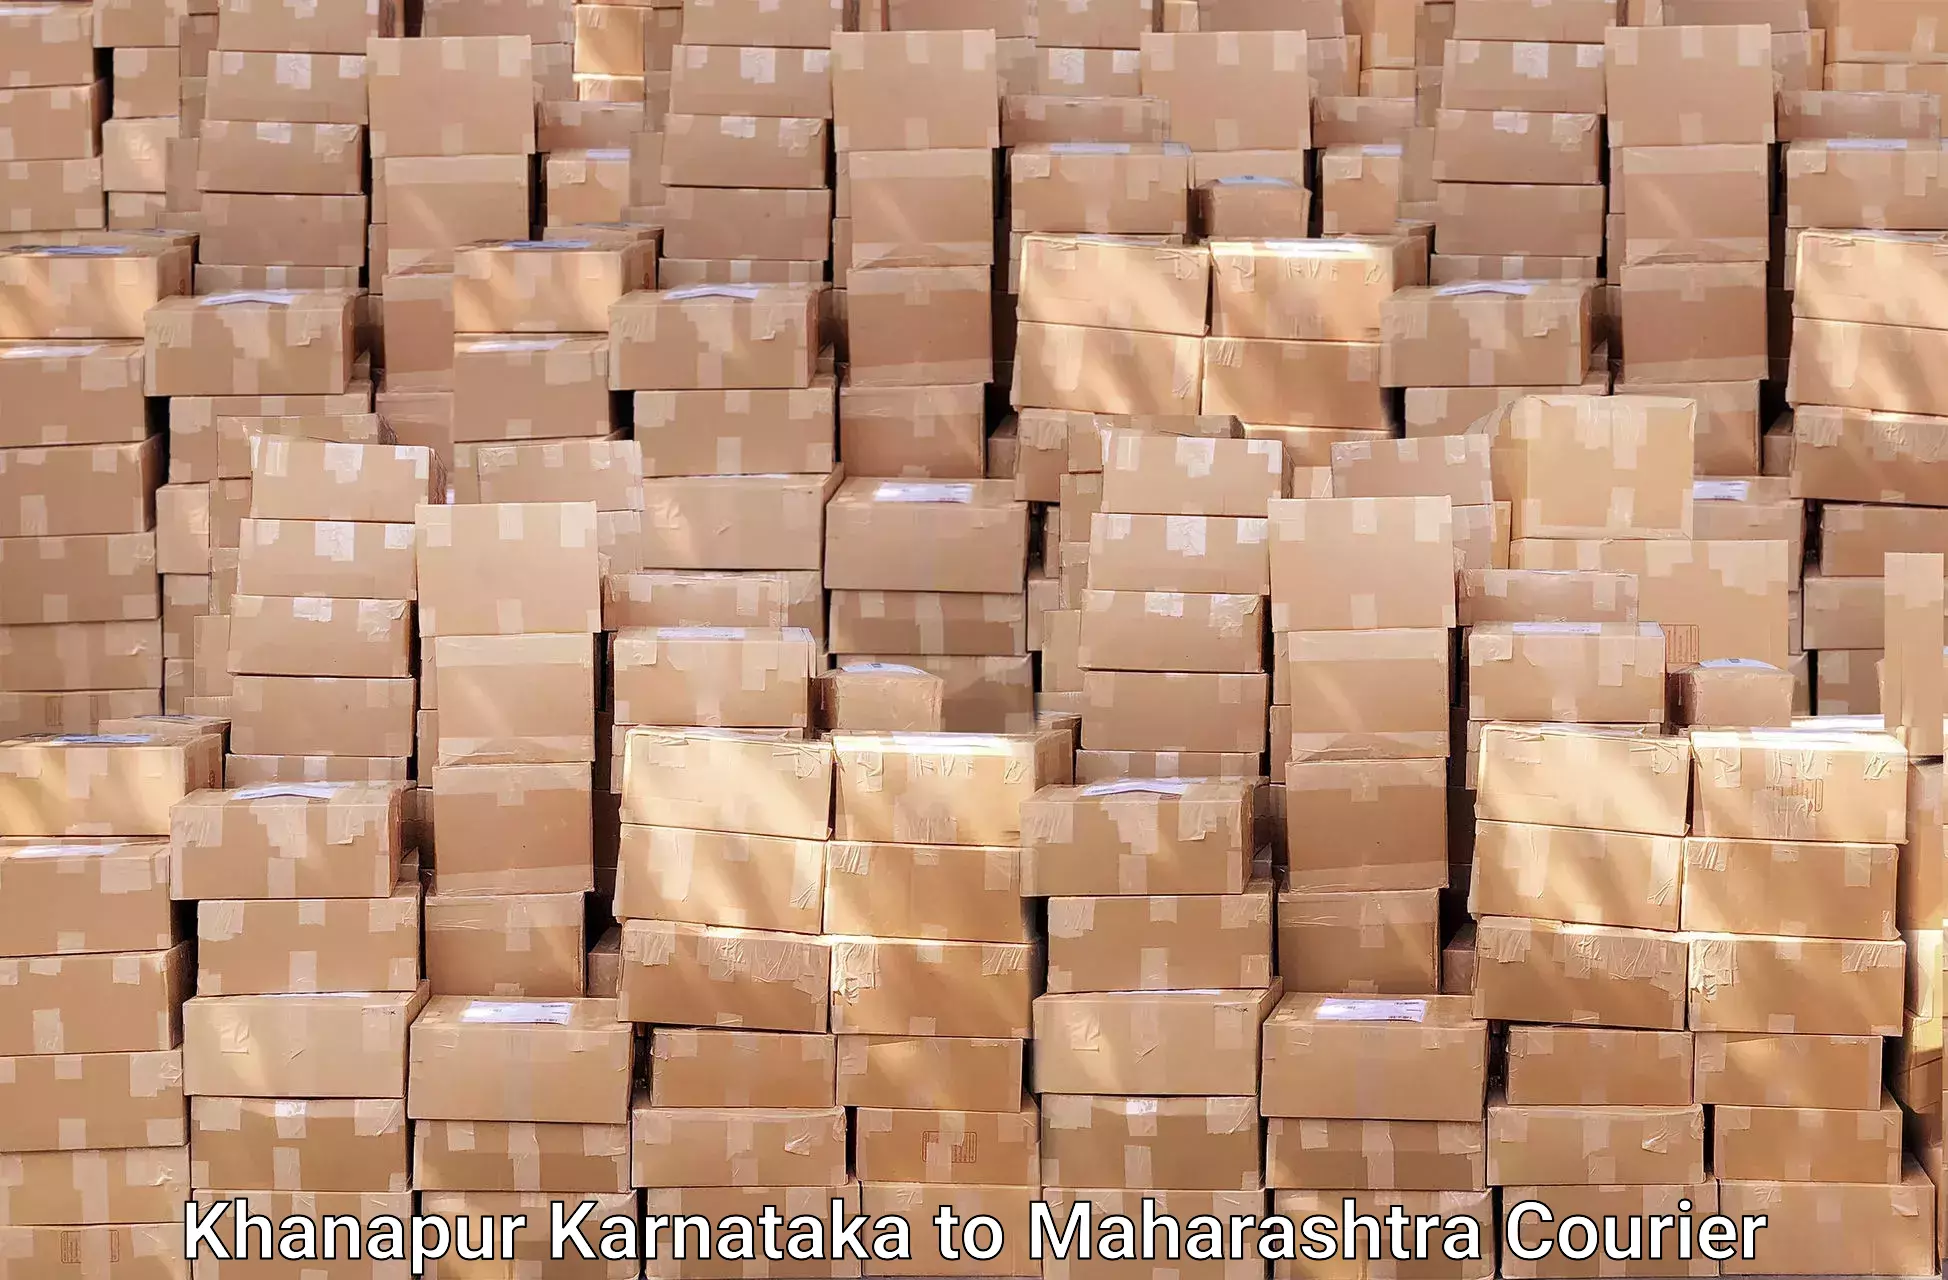 Budget-friendly movers Khanapur Karnataka to Dusarbid